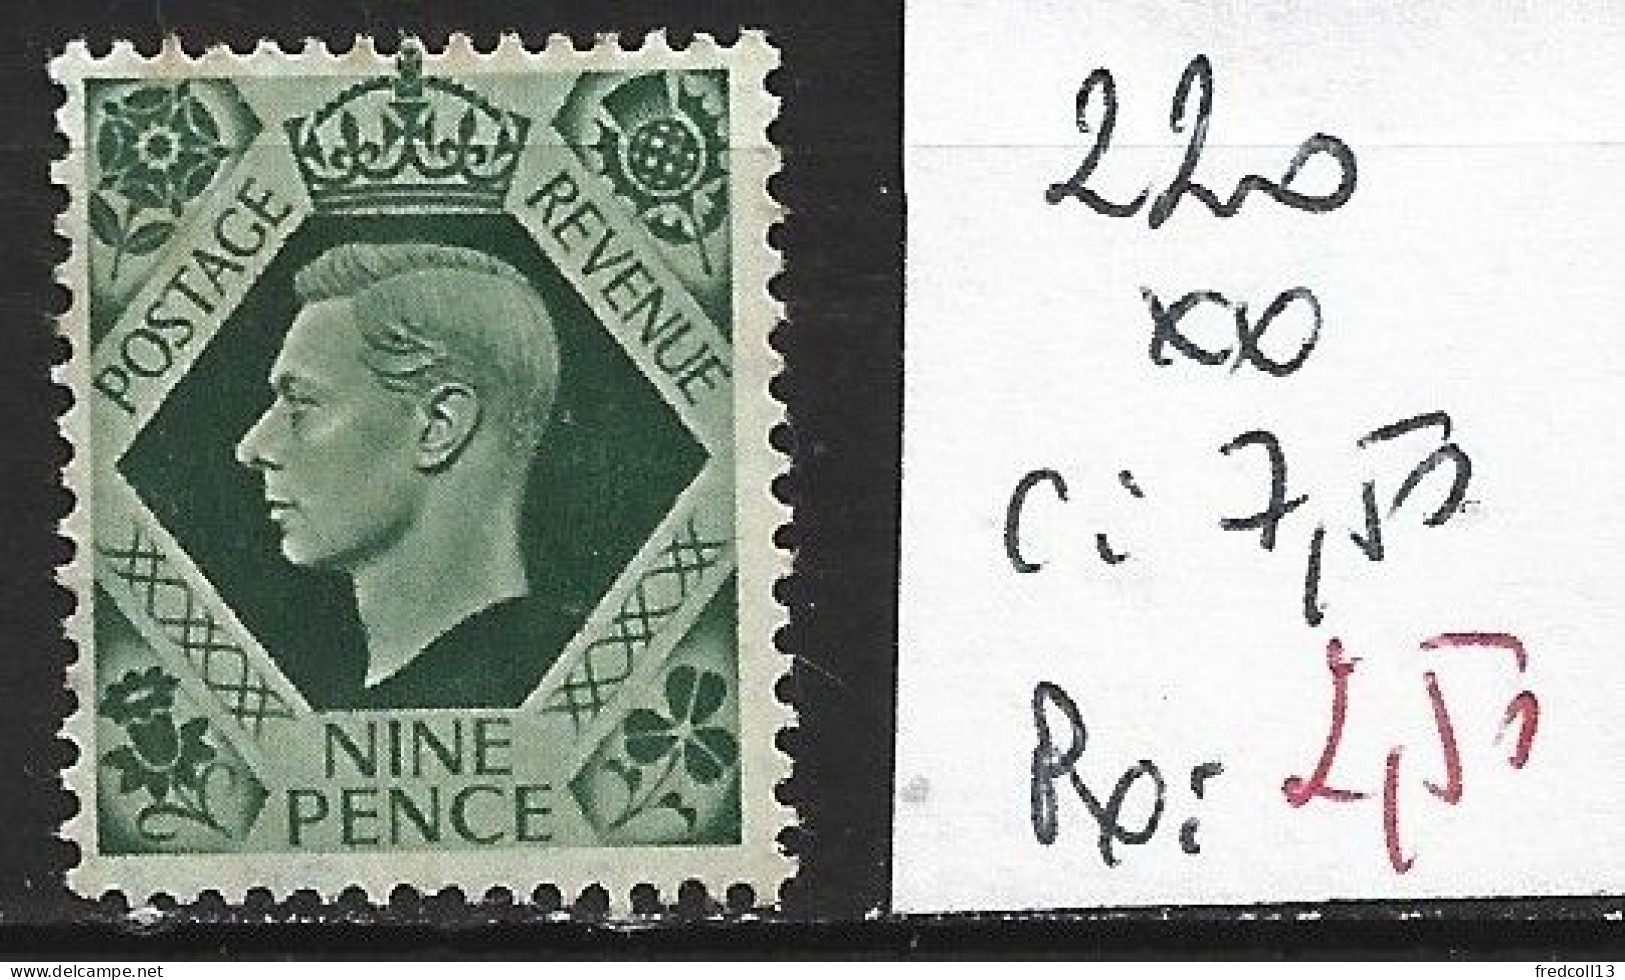 GRANDE-BRETAGNE 220 ** Côte 7.50 € - Unused Stamps